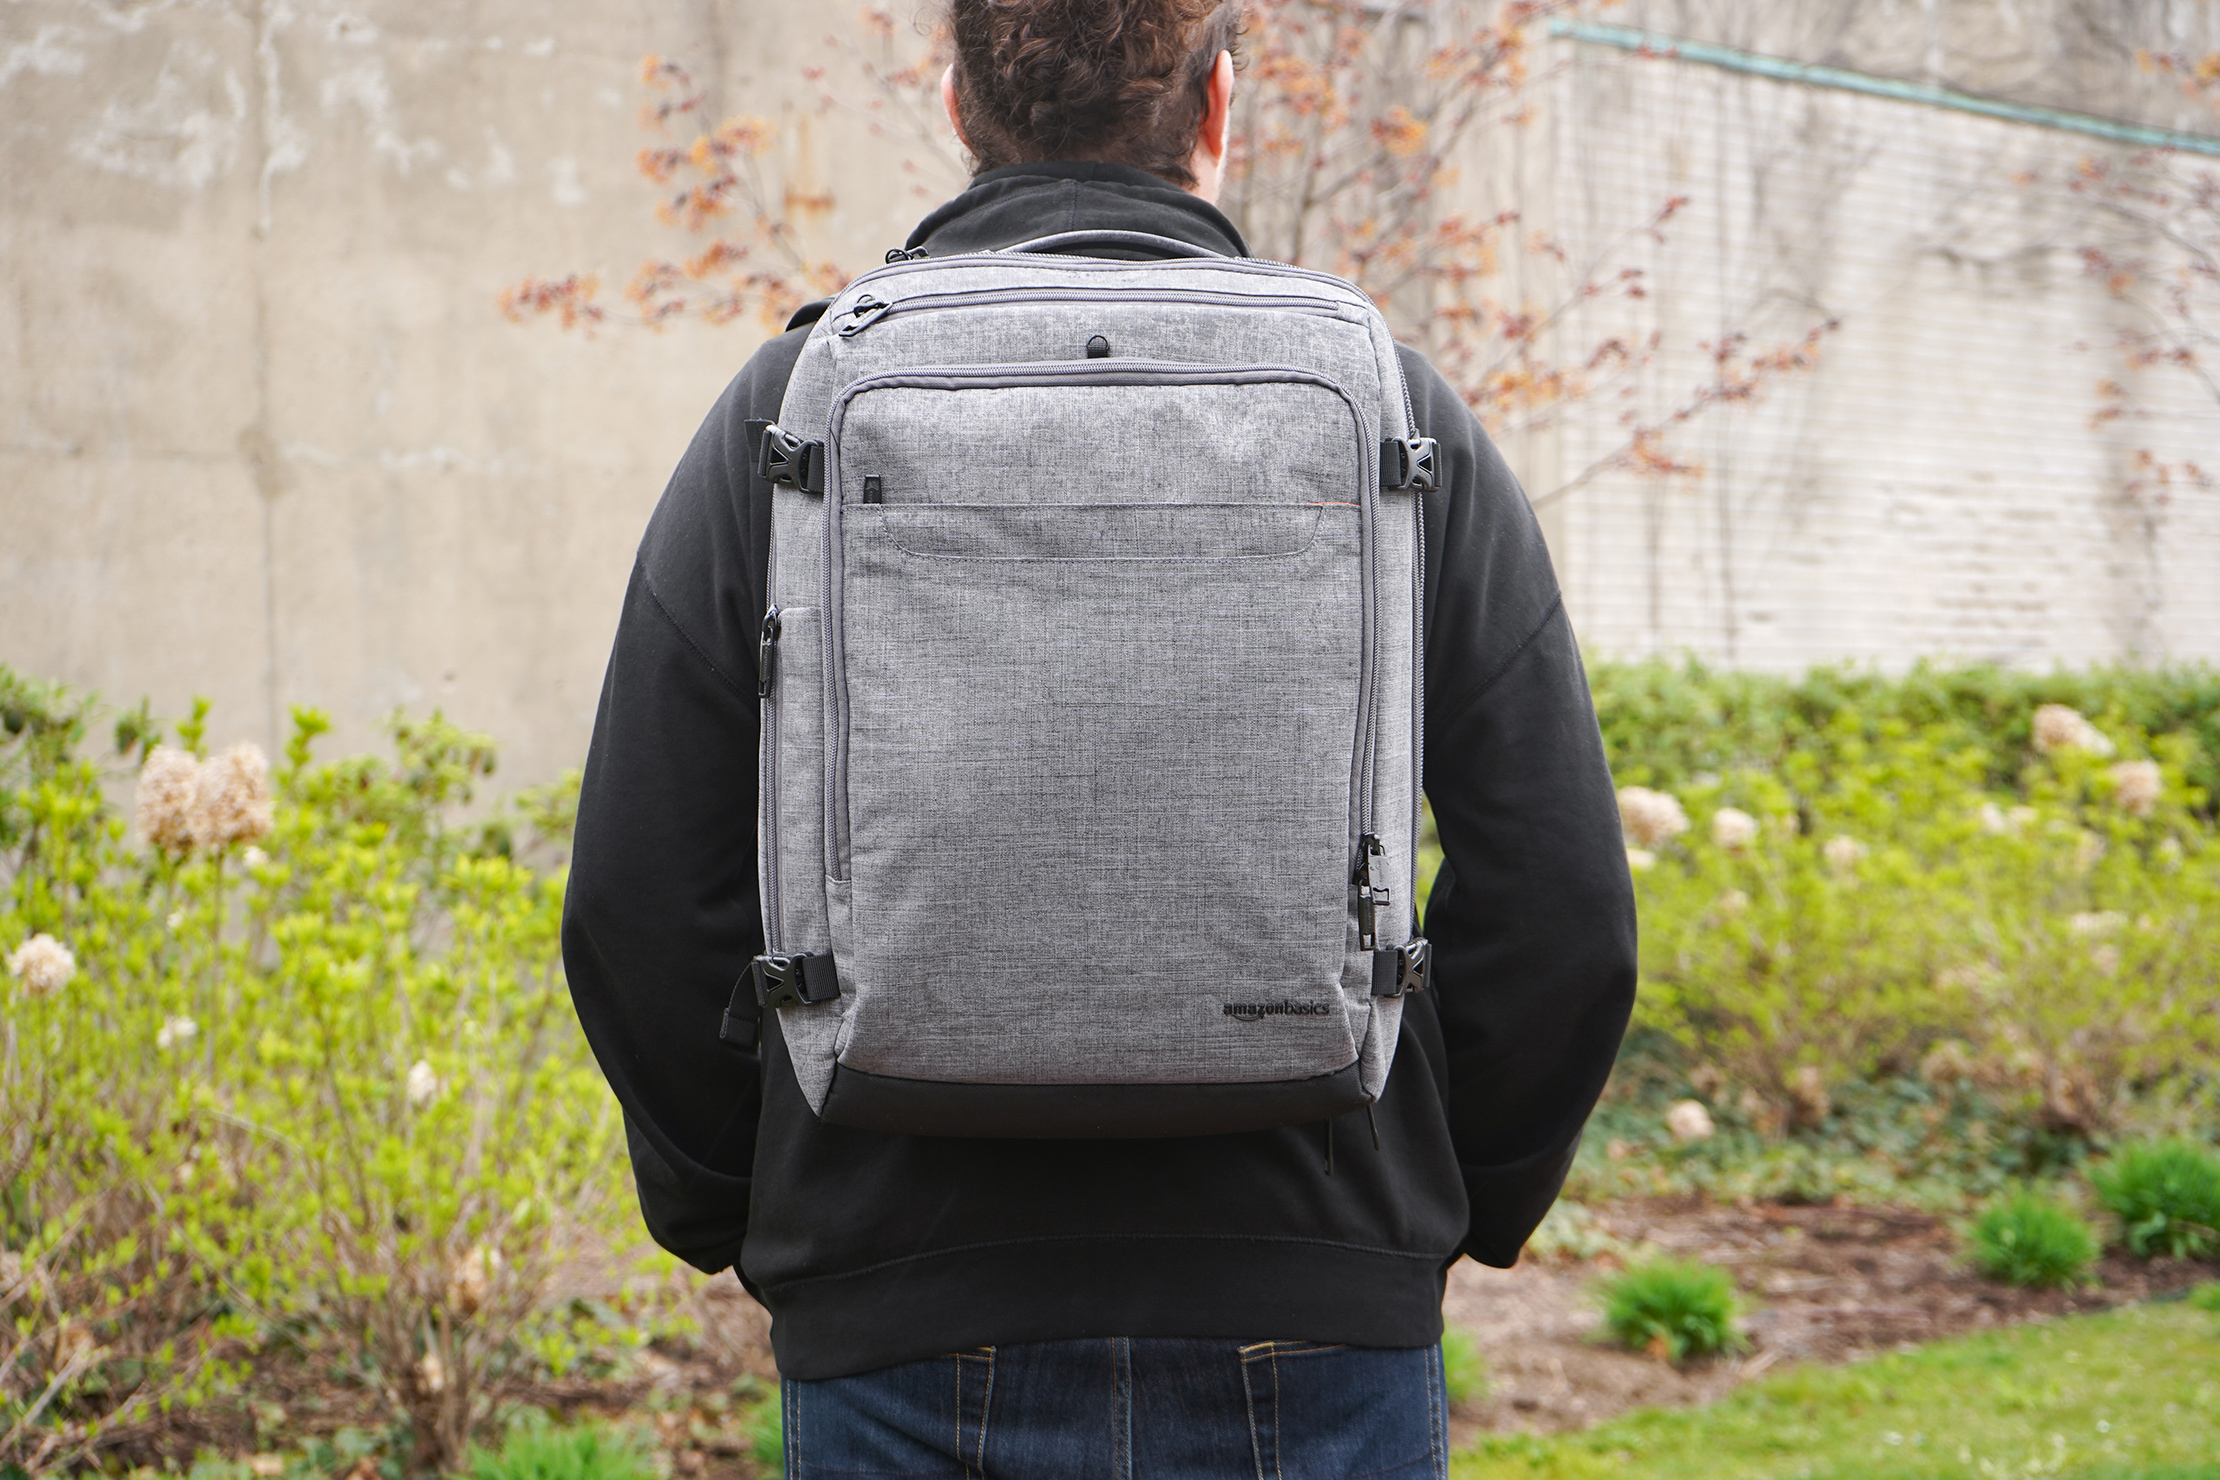 AmazonBasics Slim Travel Backpack Weekender In Detroit, Michigan